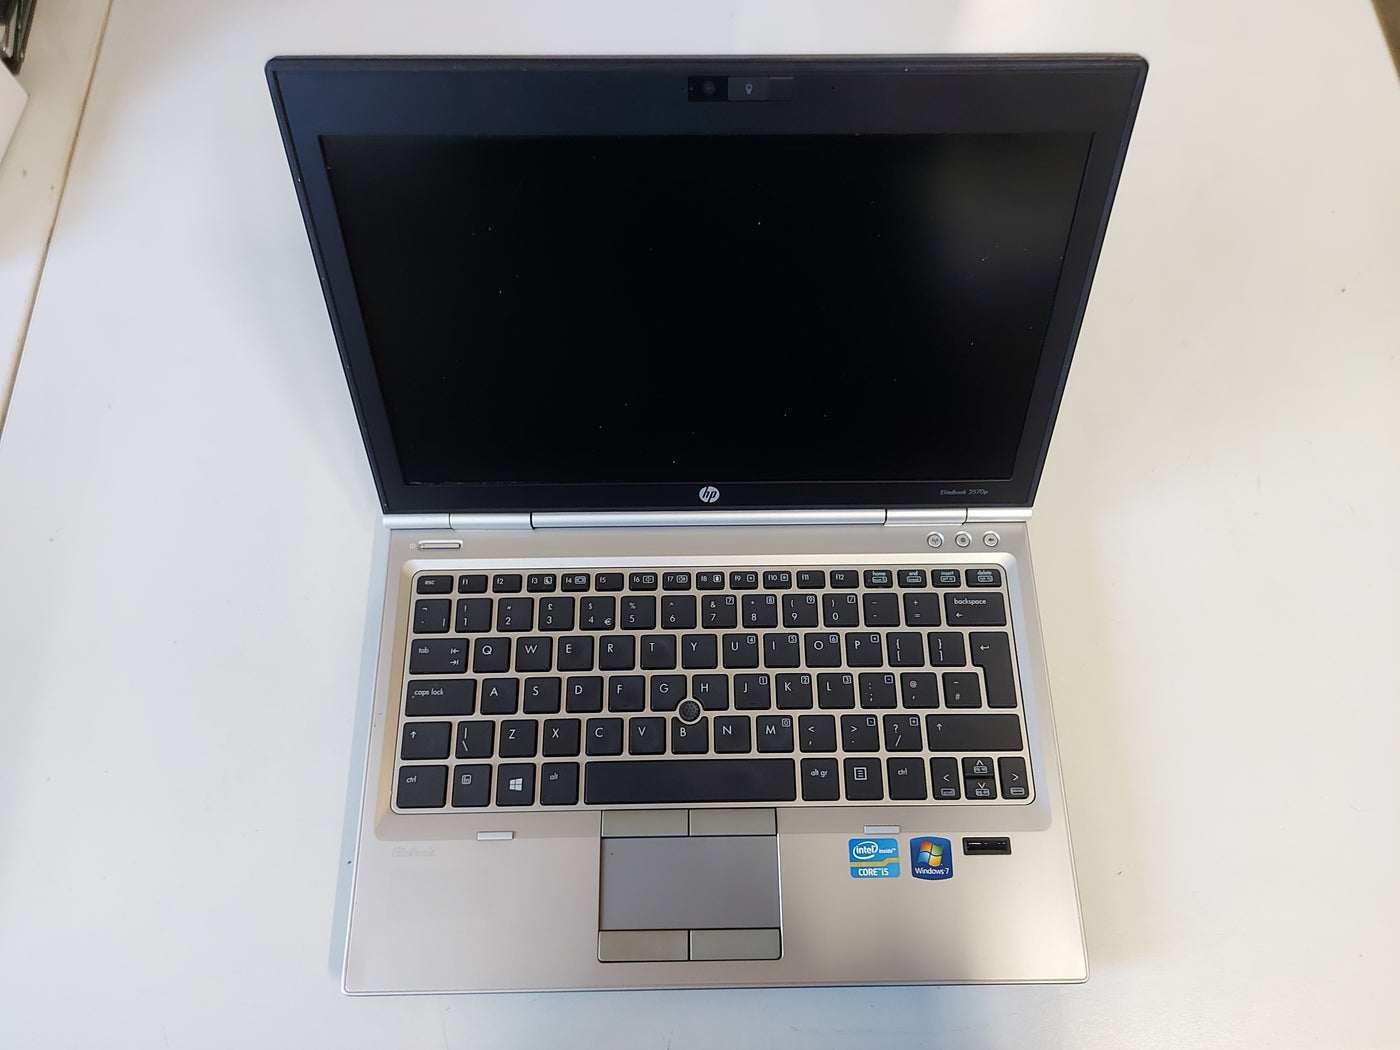 HP EliteBook 2570p 320GB HDD Core i5-3230M 2600MHz 6GB RAM 2.6GHz 12.5" Laptop ( B6QO6ET#ABU ) USED